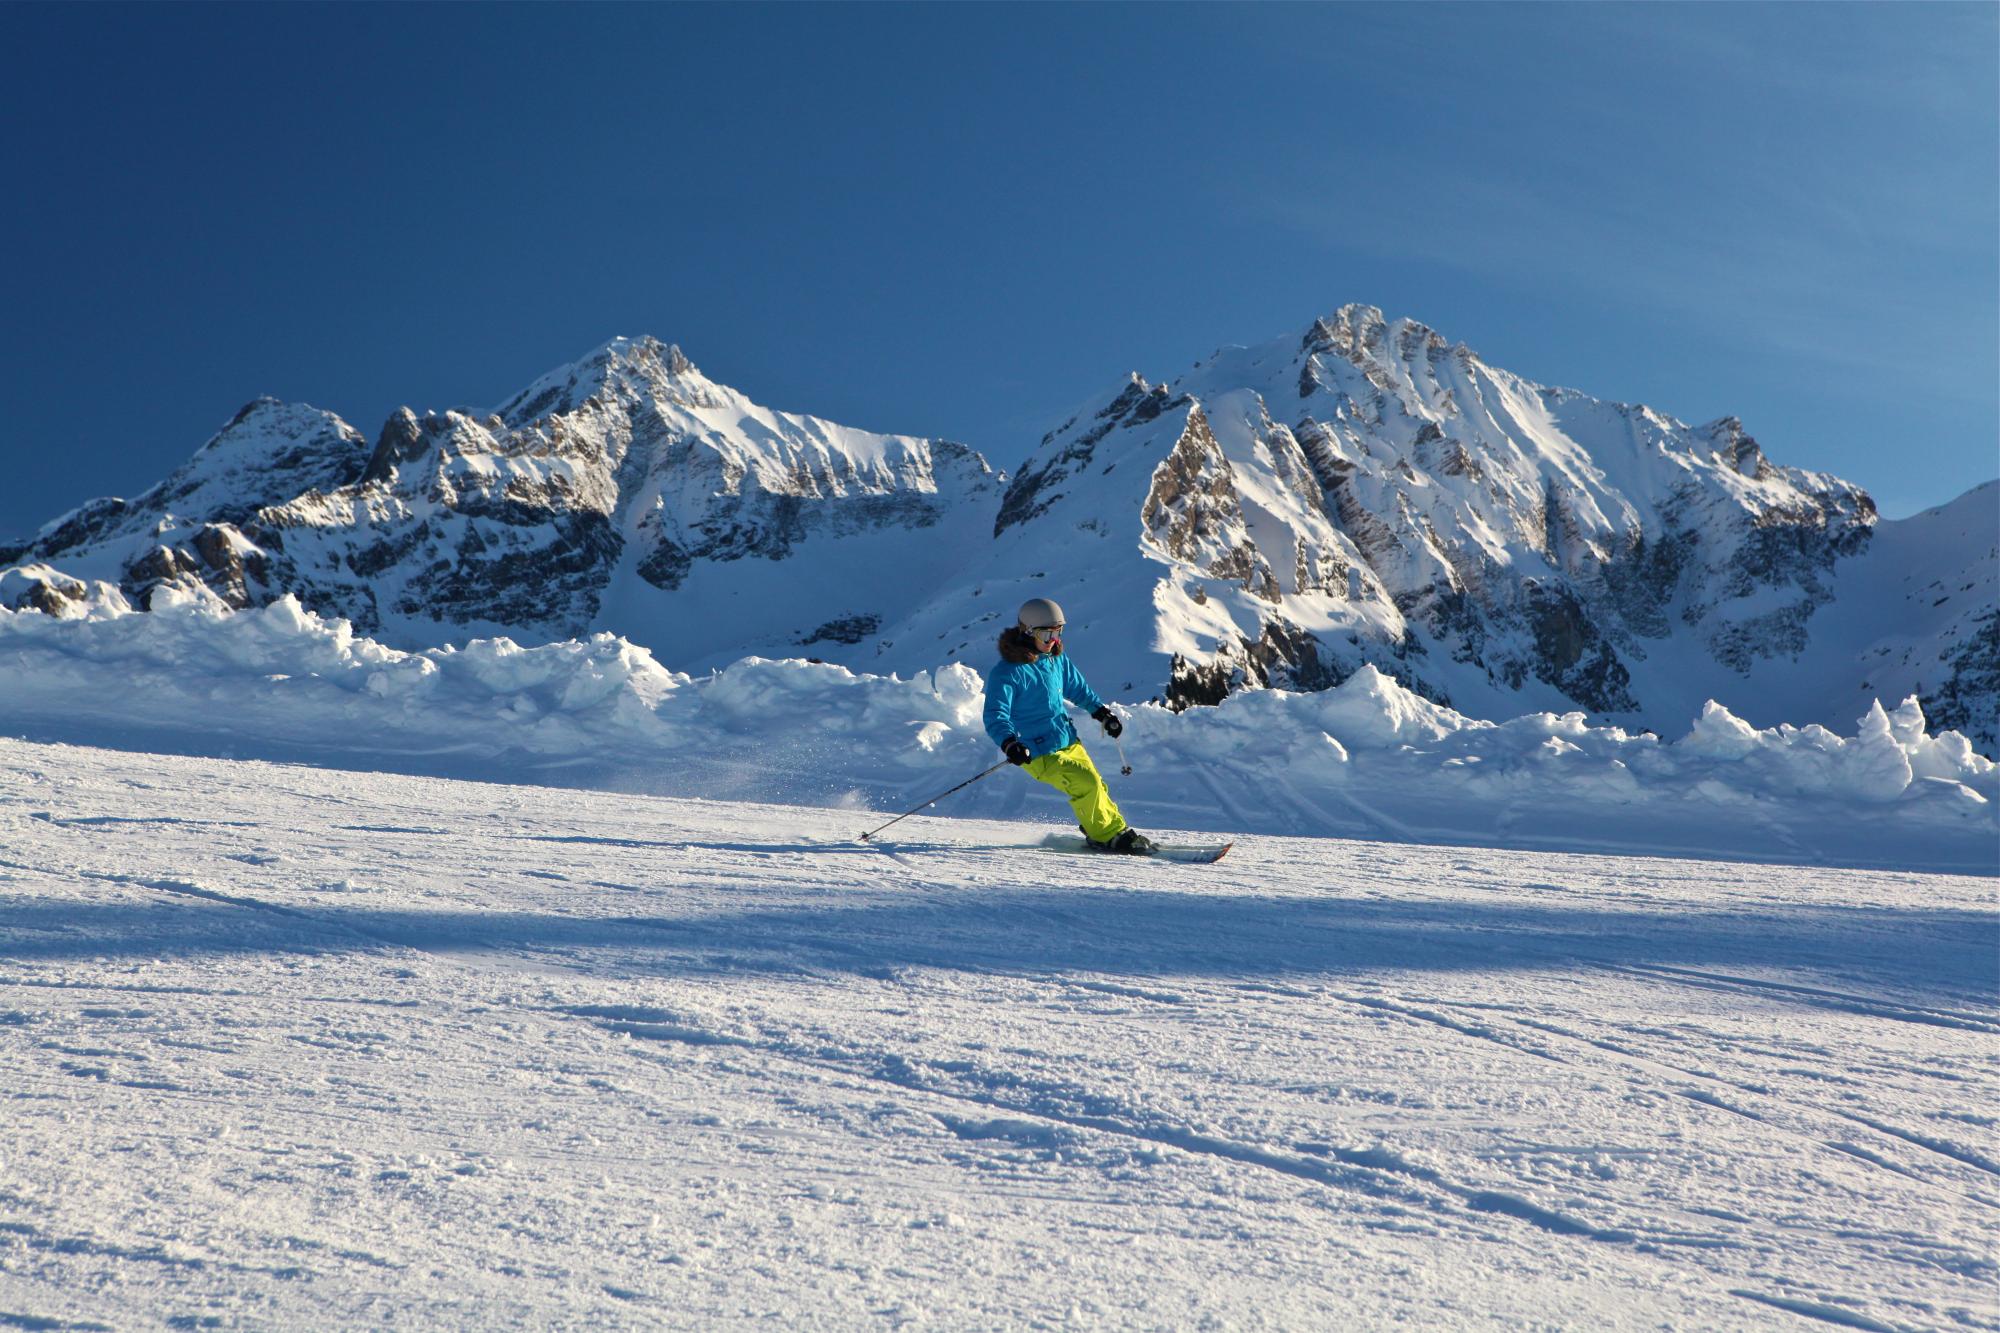 Skier on the slopes - winter